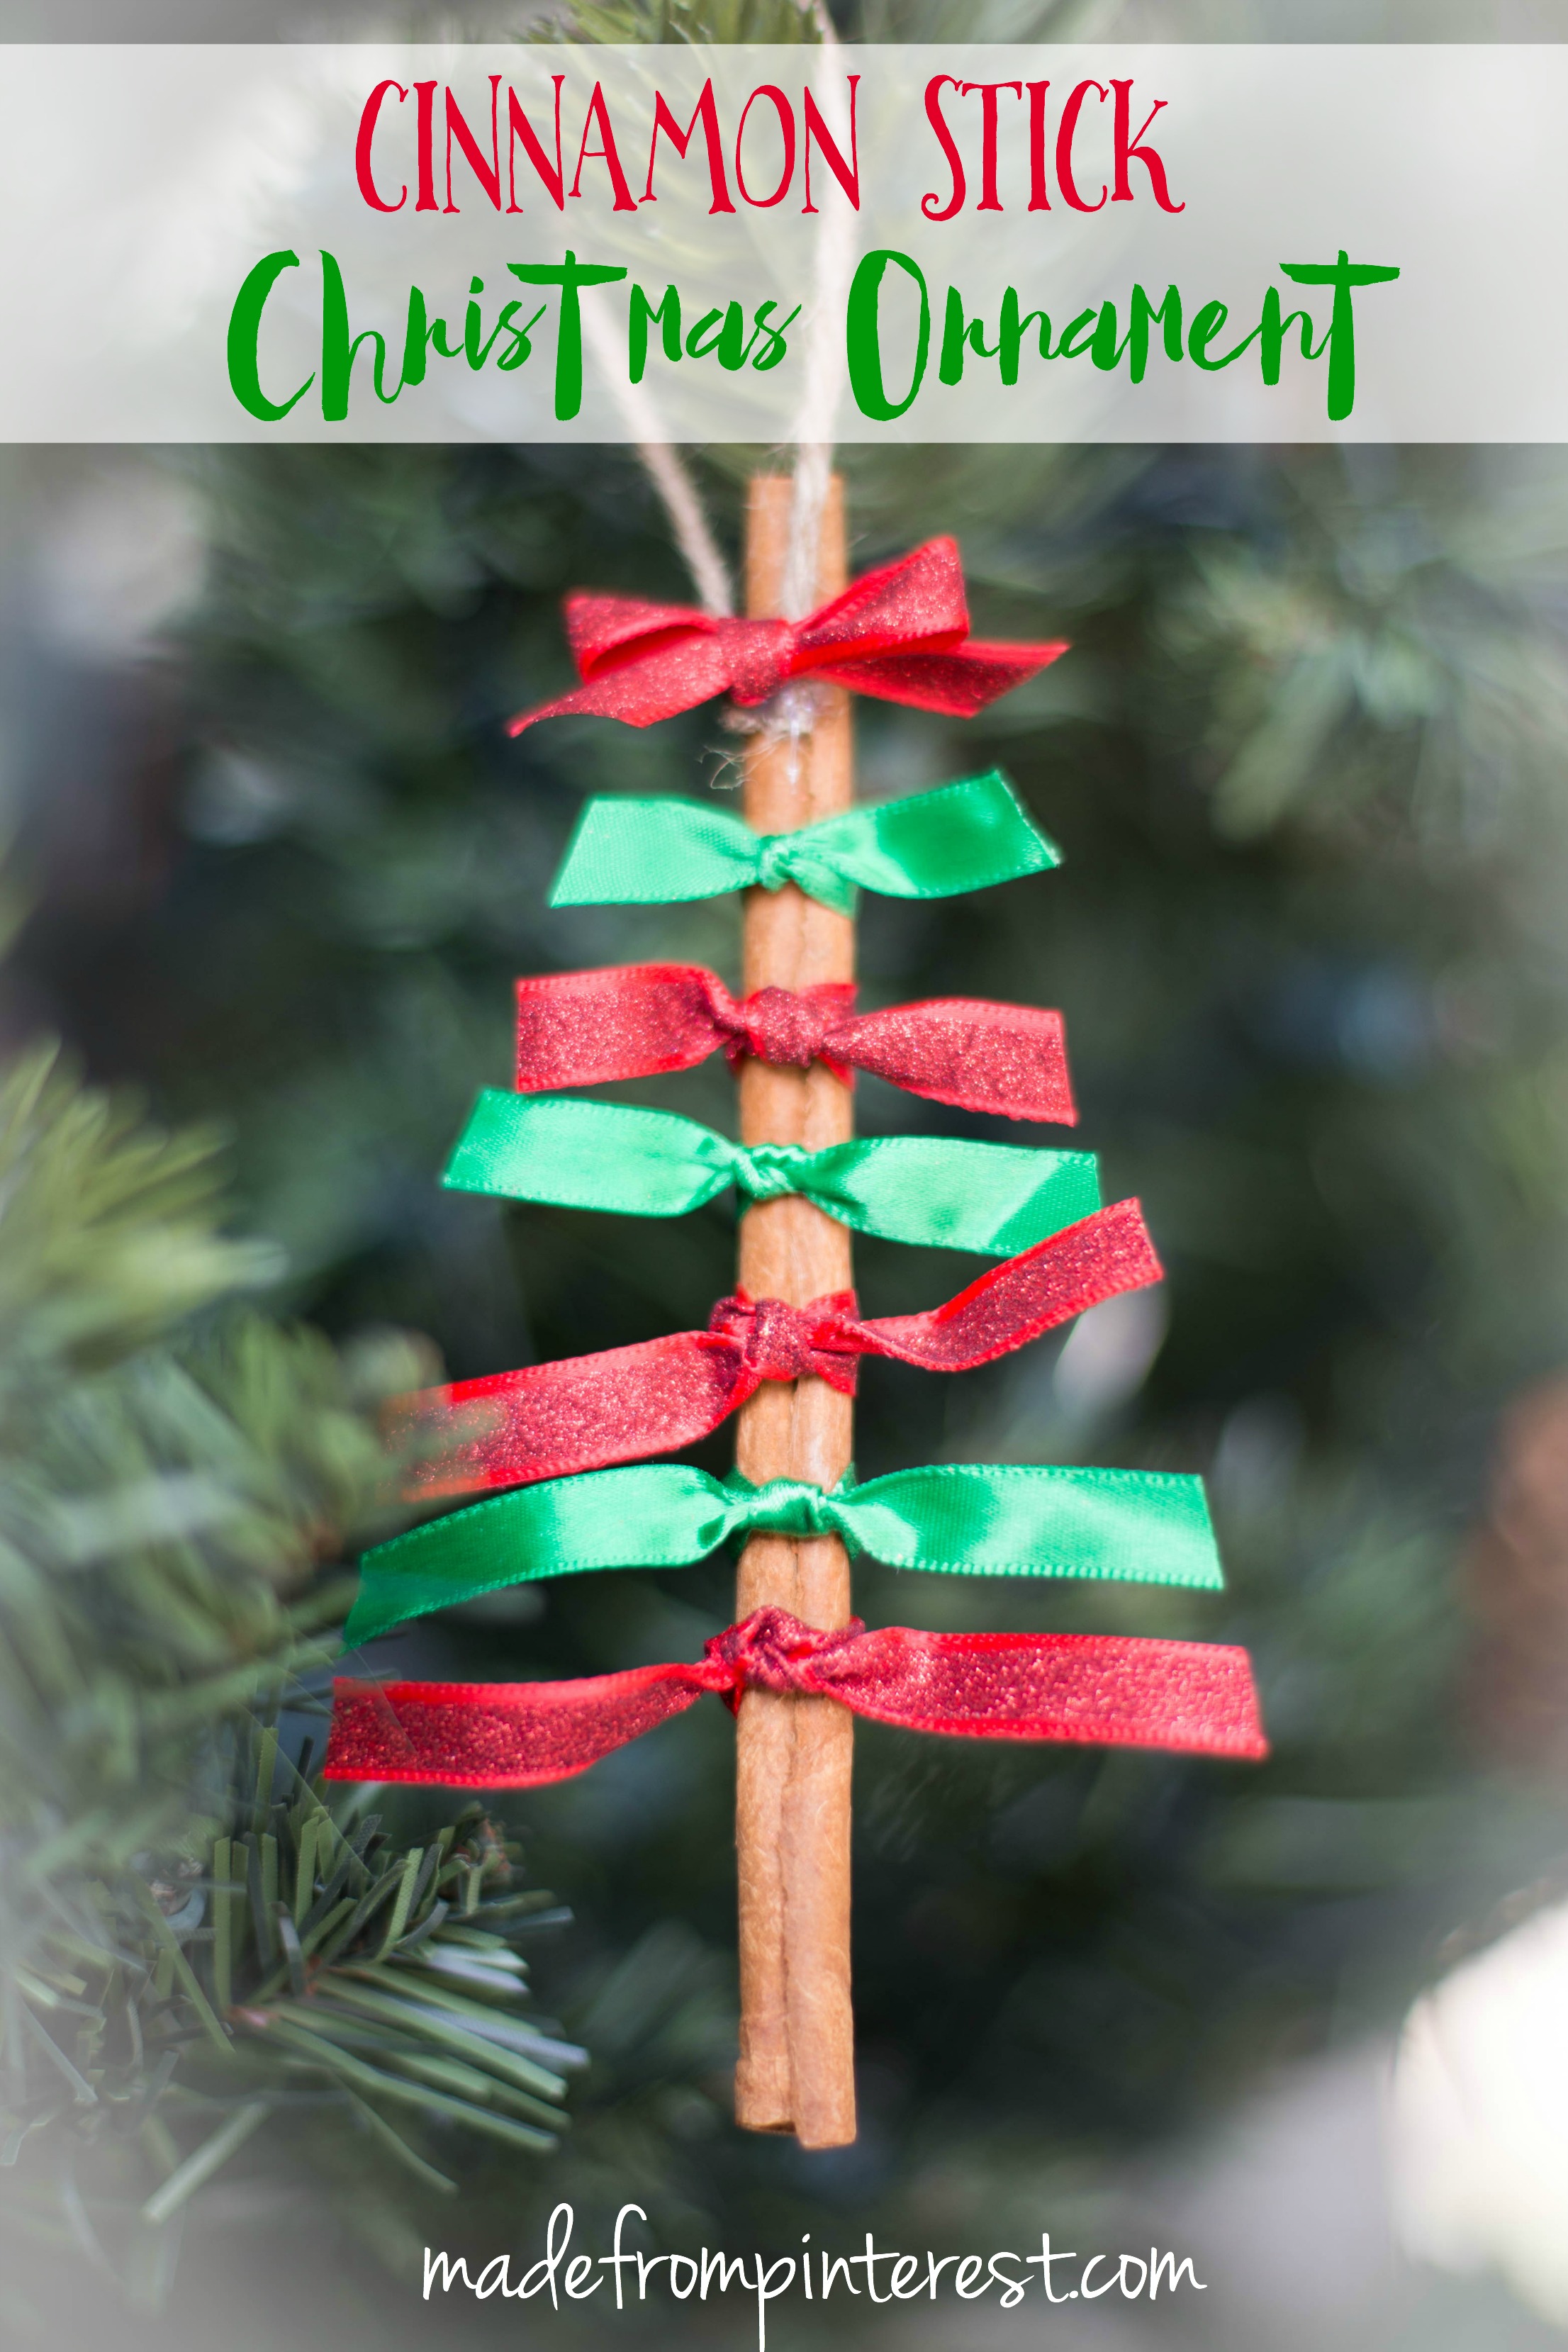 https://www.thisgrandmaisfun.com/wp-content/uploads/2015/11/Cinnamon-Stick-Christmas-Ornament.jpg